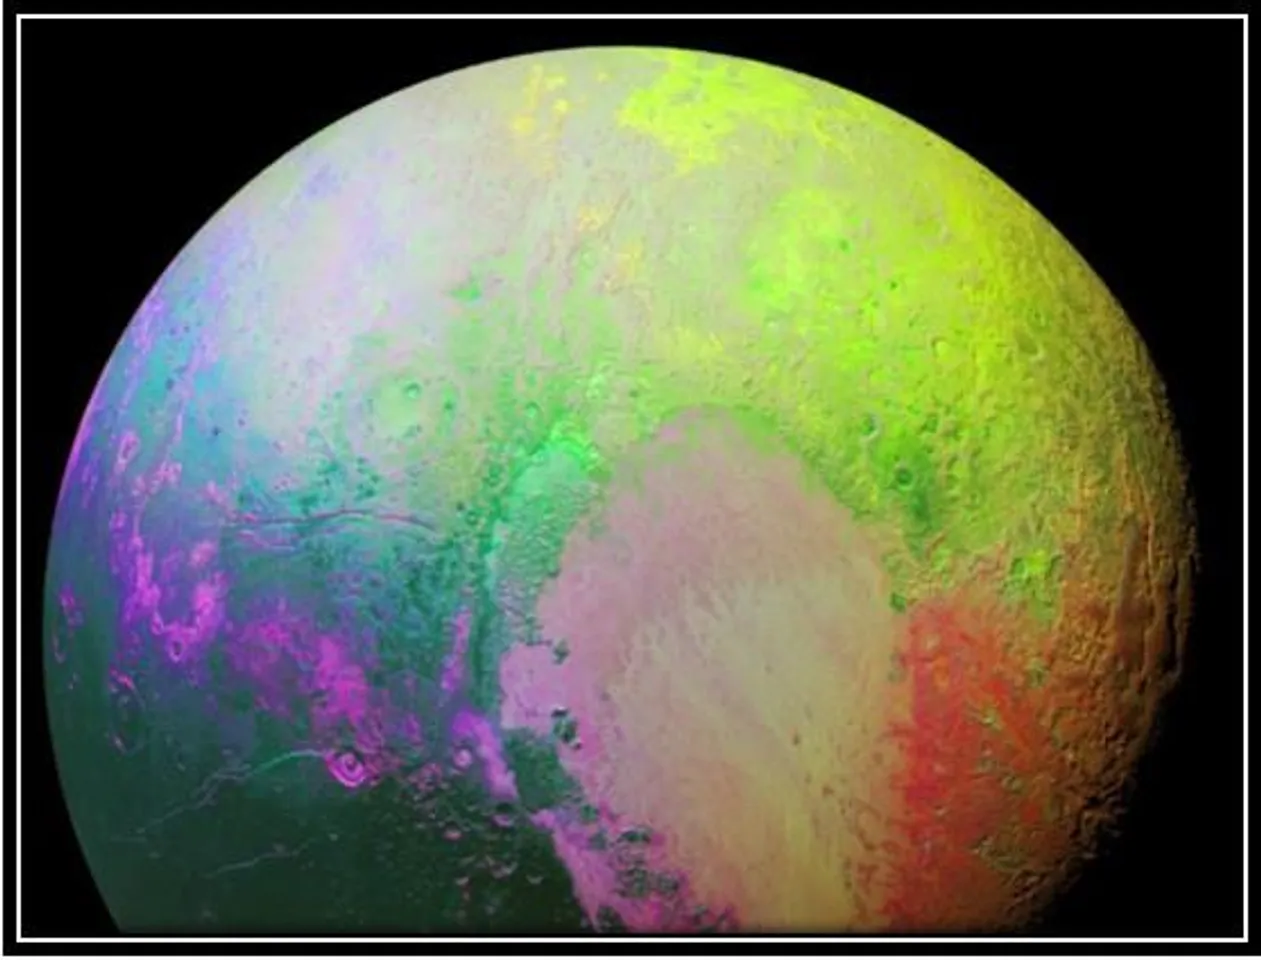 NASA has shared an amazing rainbow image of Pluto